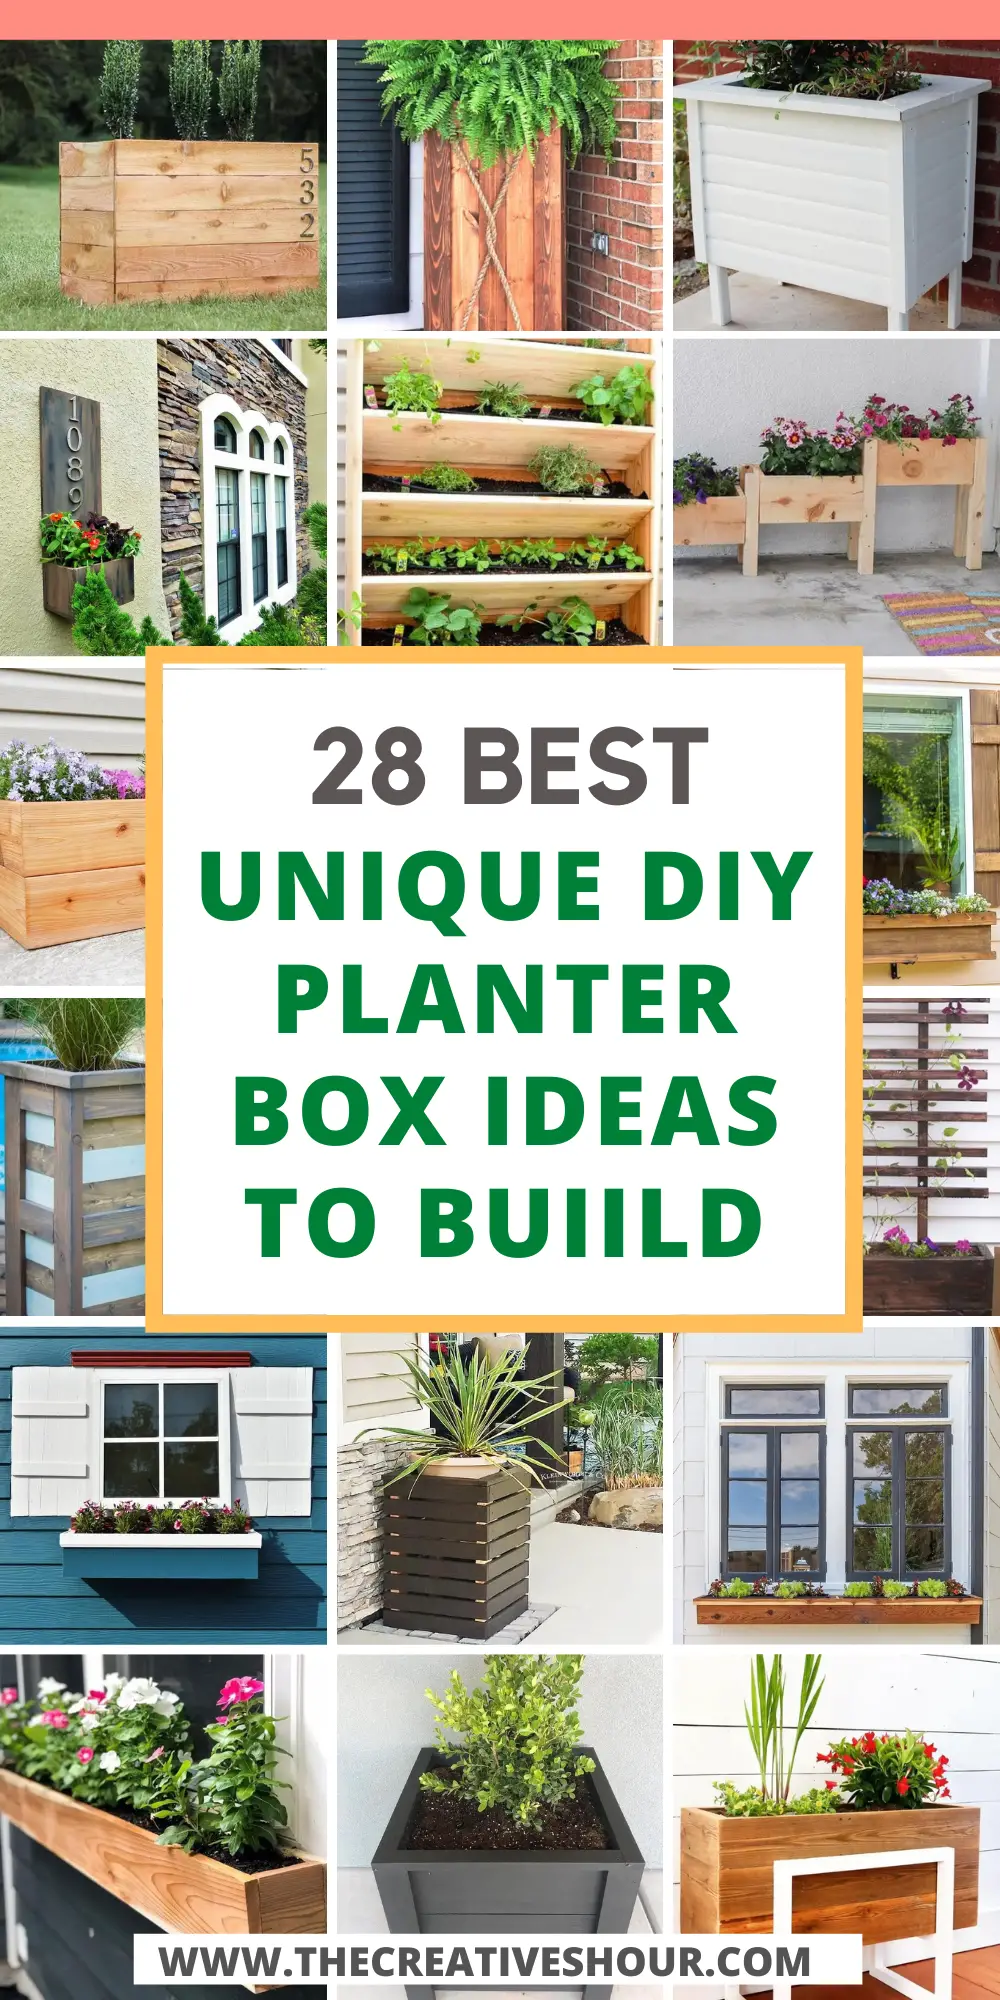 Planter box ideas – 10 ways to create spectacular displays